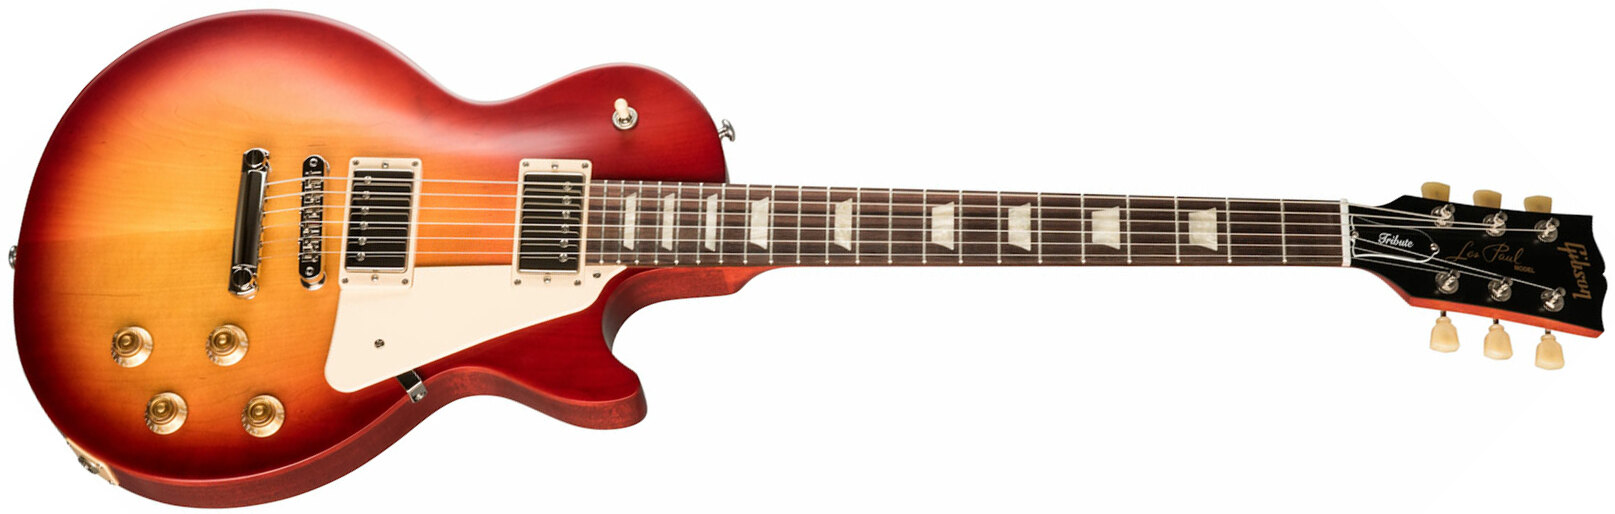 Gibson Les Paul Tribute Modern 2h Ht Rw - Satin Cherry Sunburst - Single cut electric guitar - Main picture